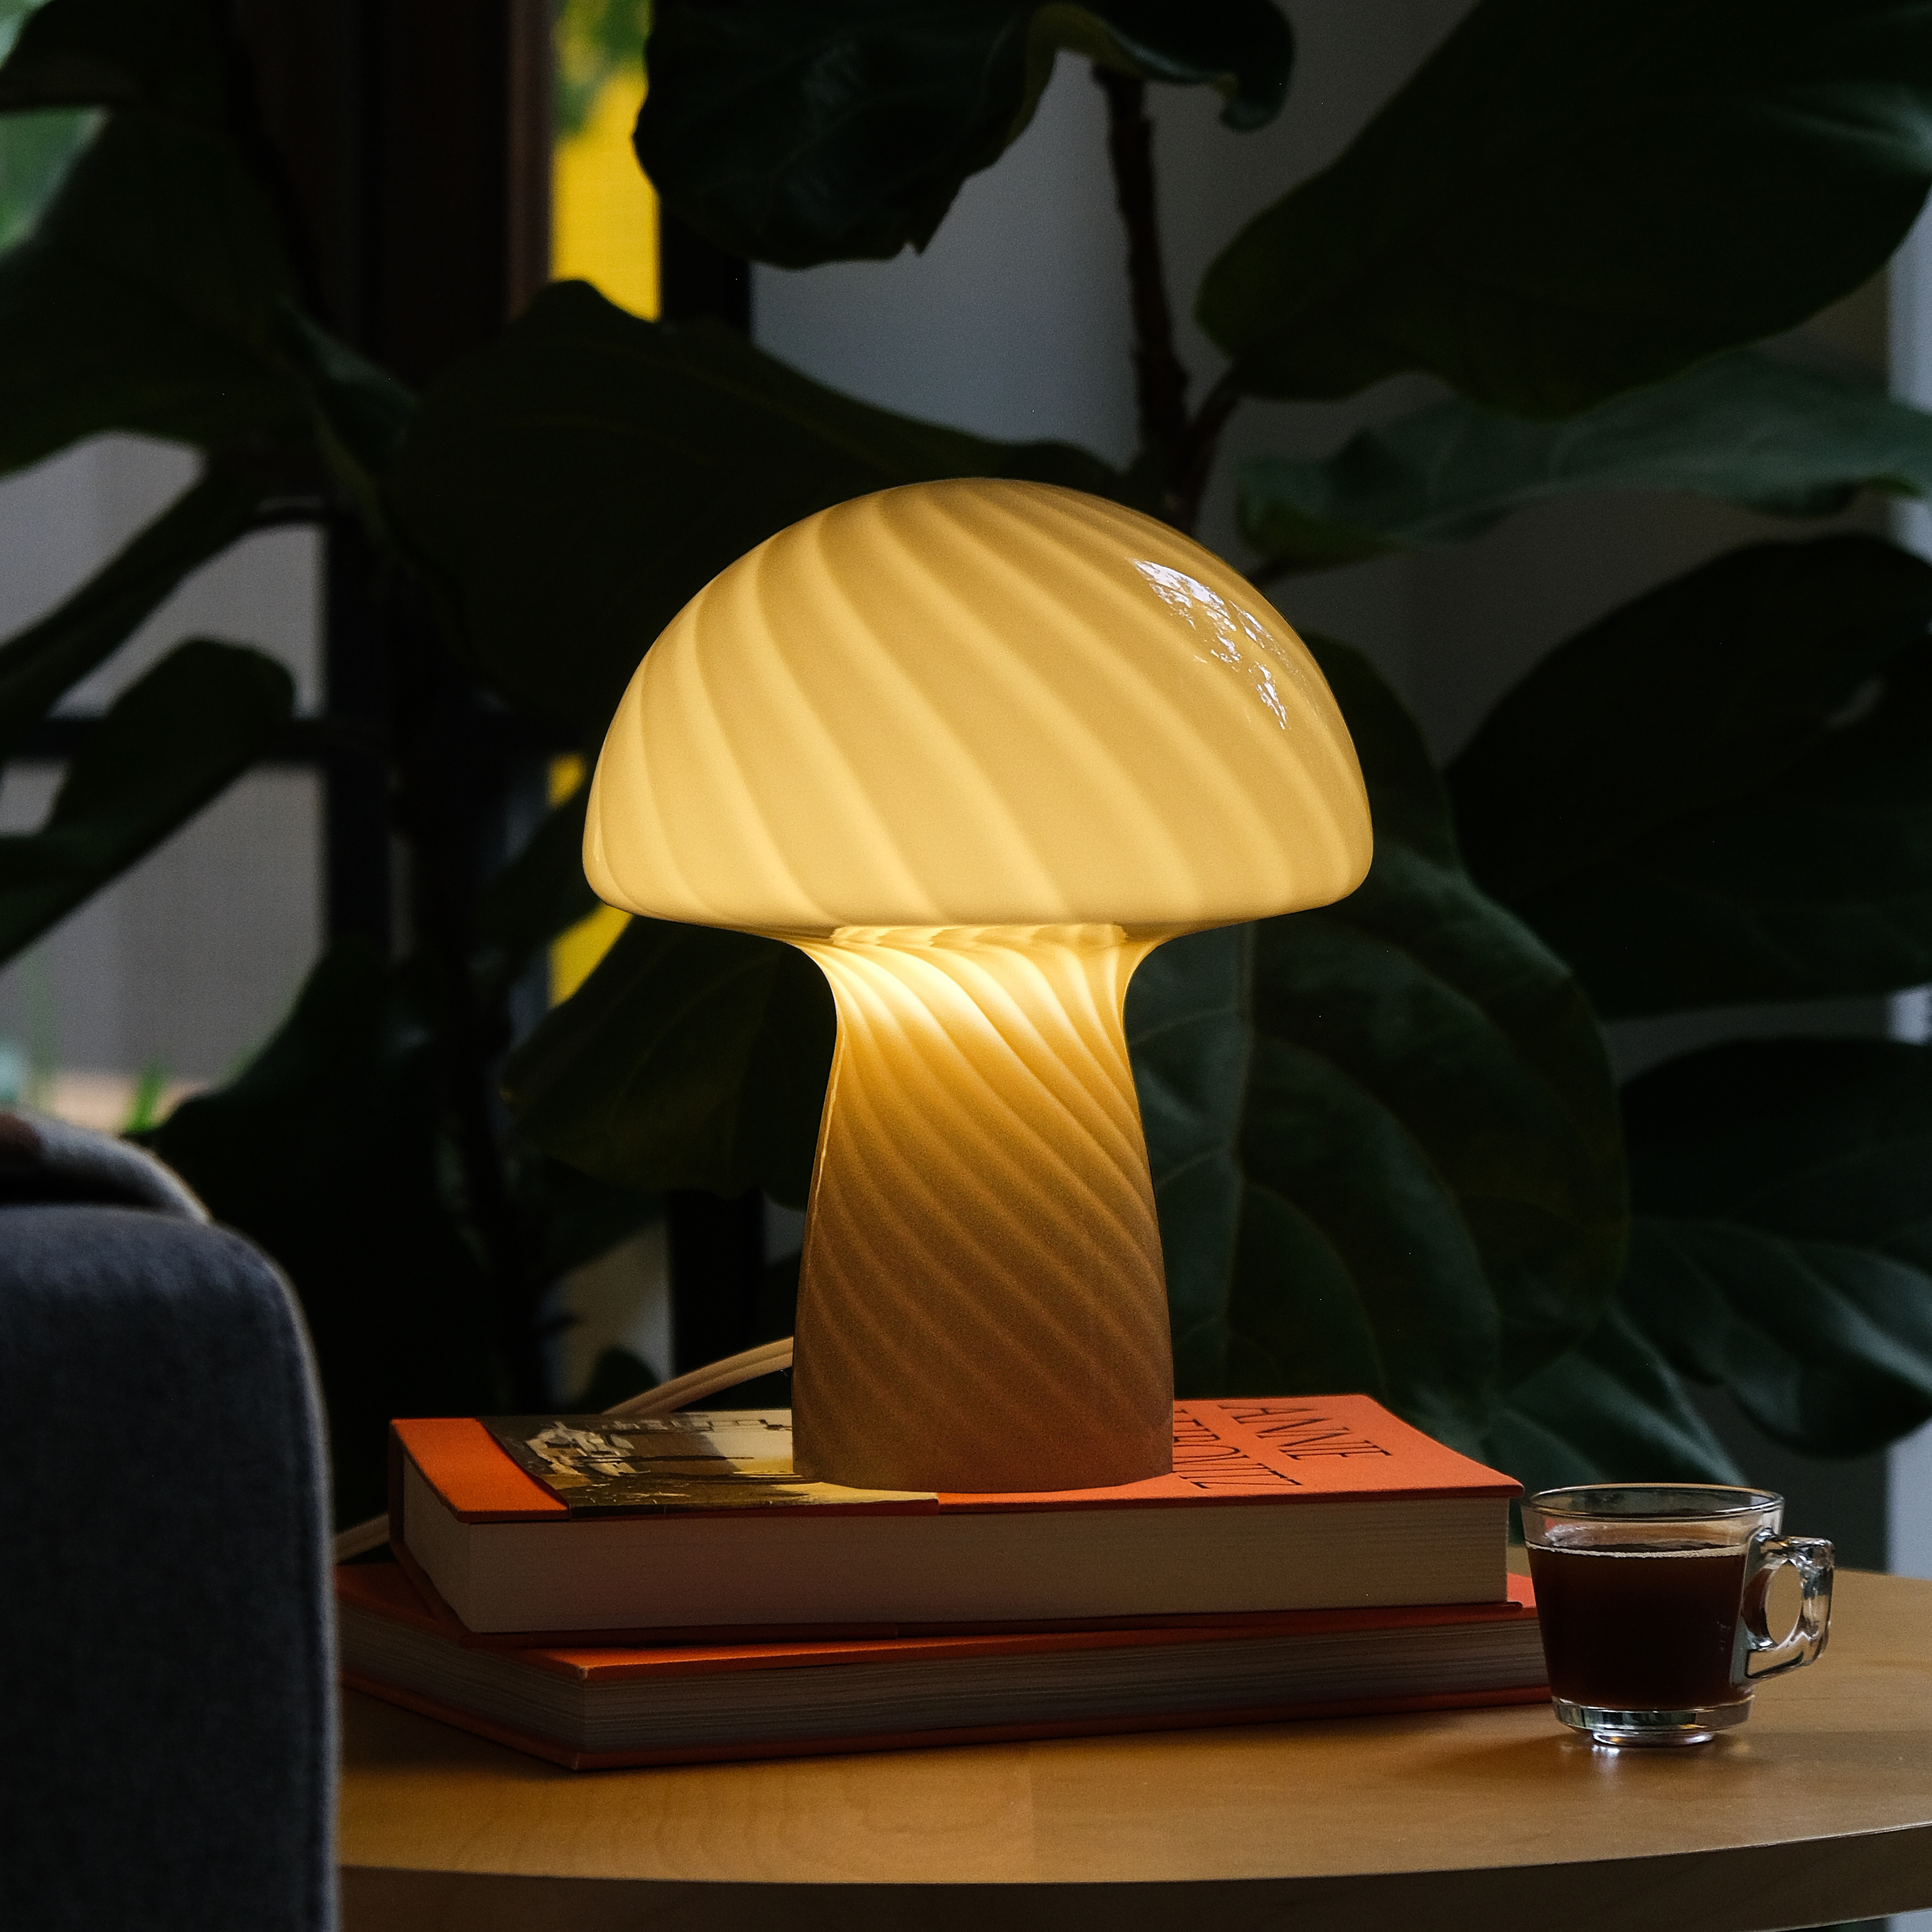 Glass Mushroom Table Lamp, Petite Close Top, Butter